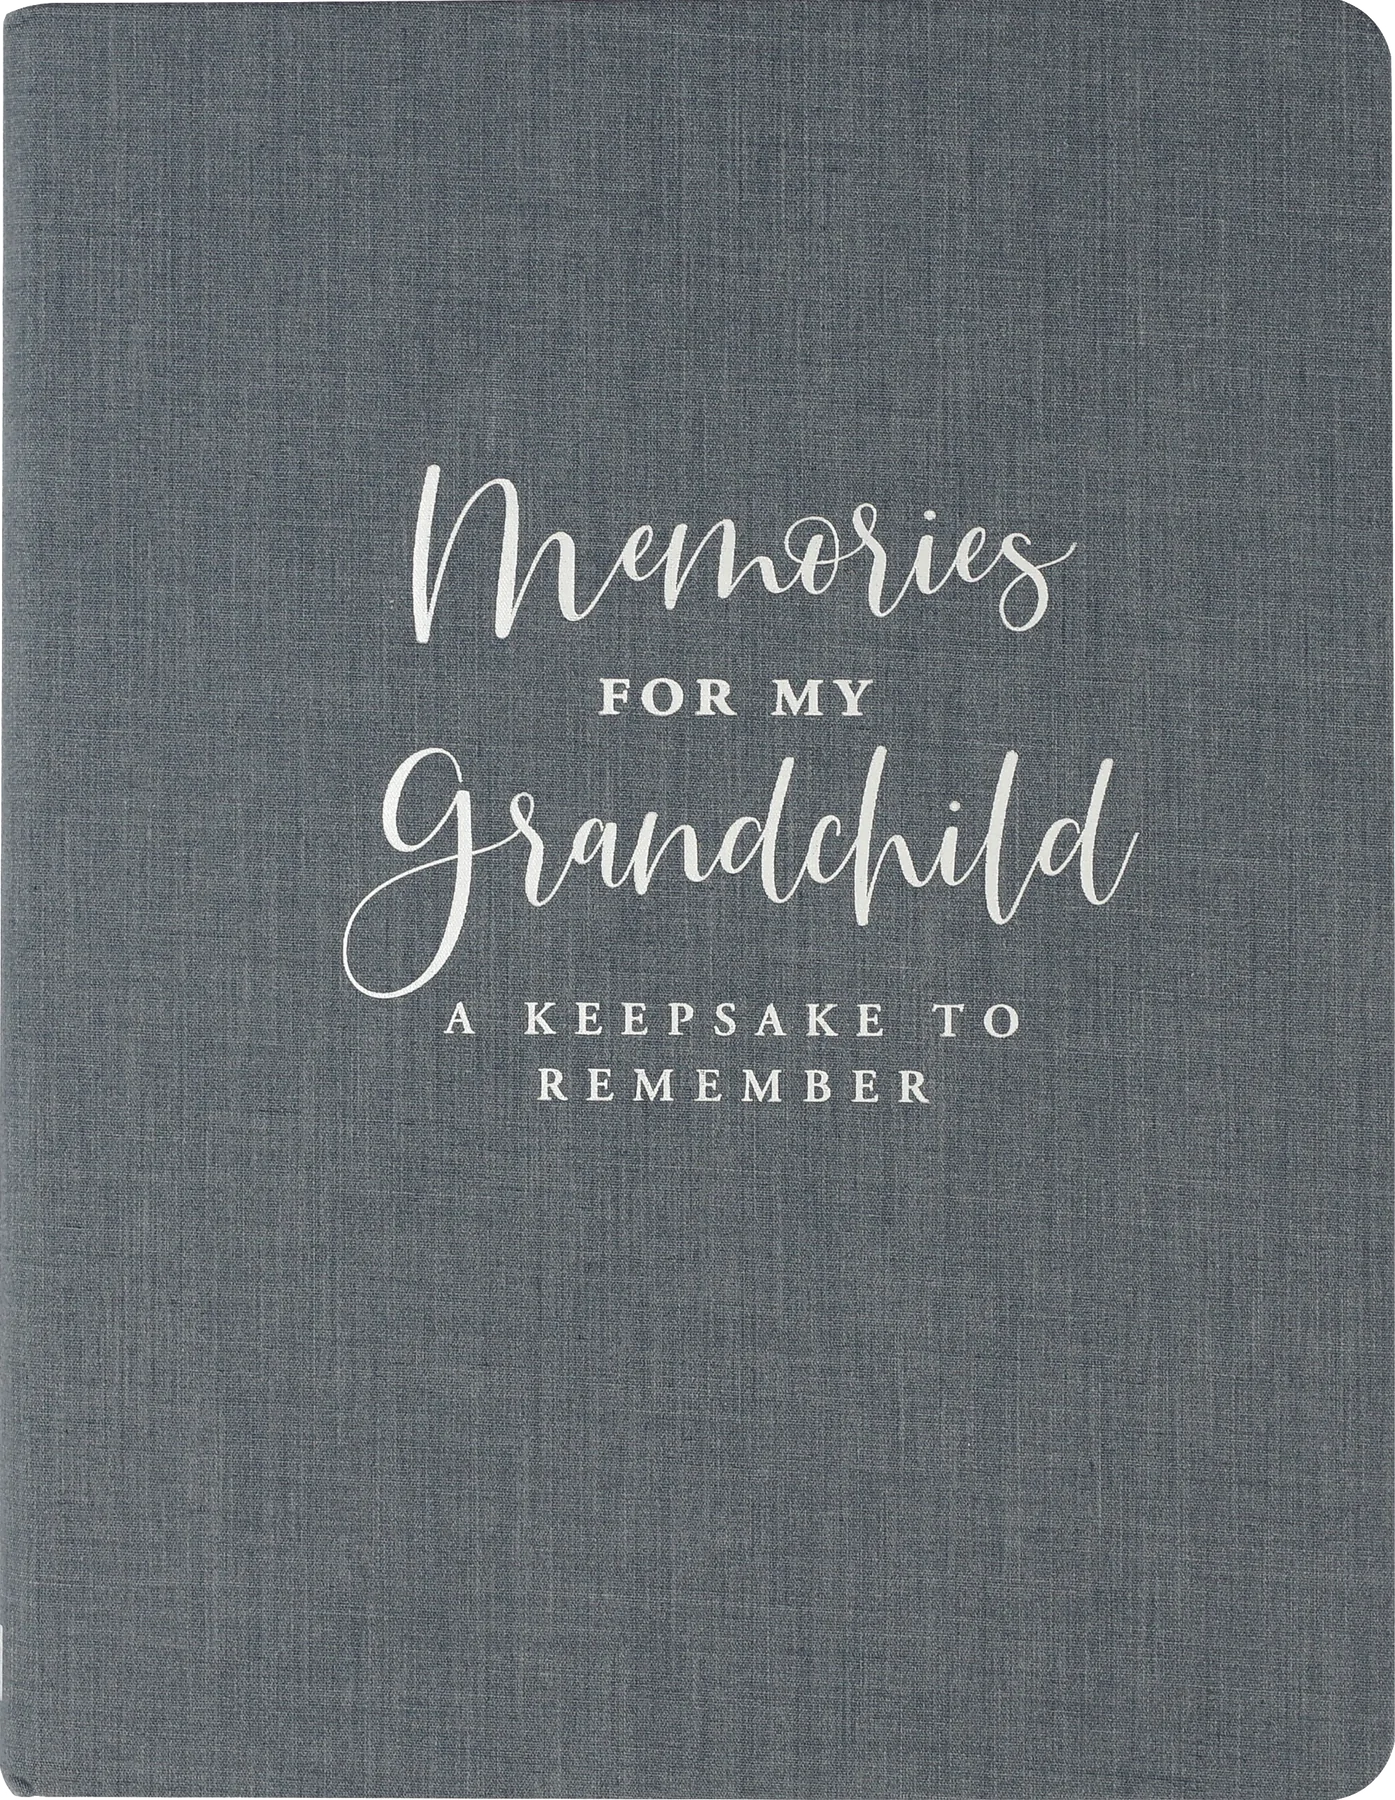 Memories for My Grandchild Journal